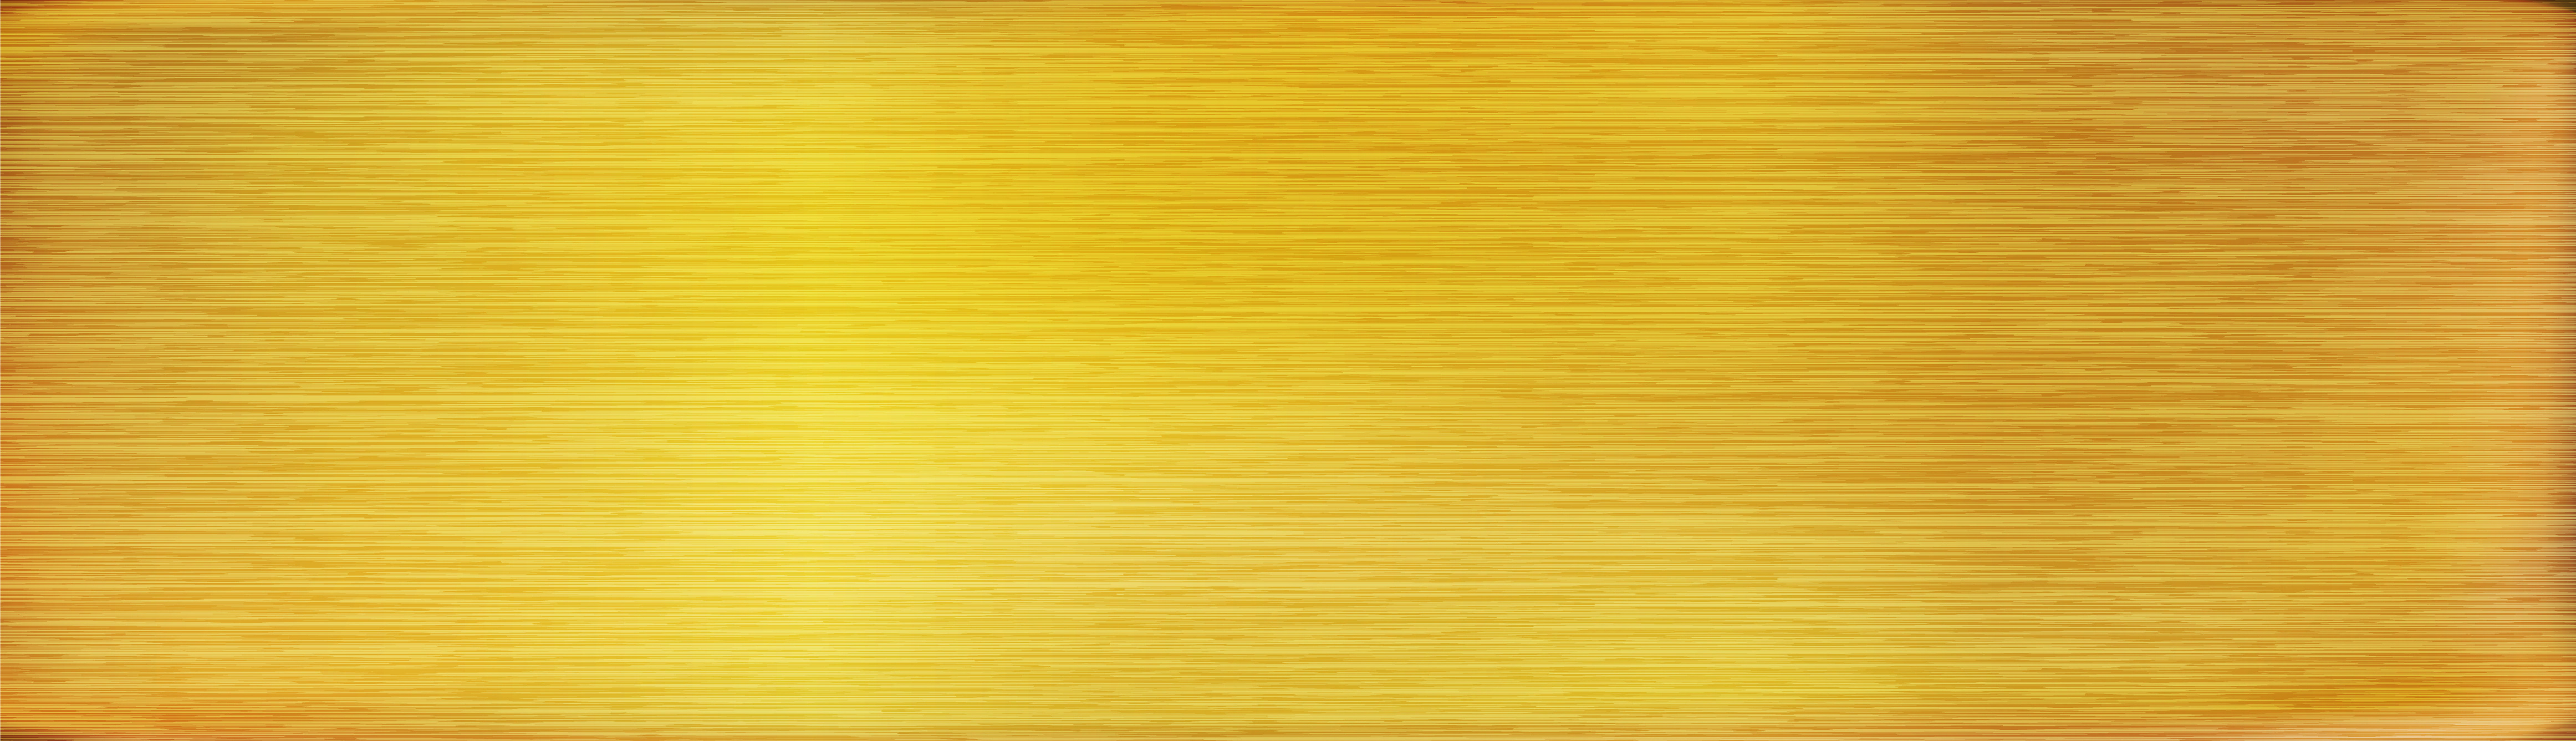 Brushed or Polished Gold Metal Texture Background. Rectangle Realistic Golden Jewel Backdrop